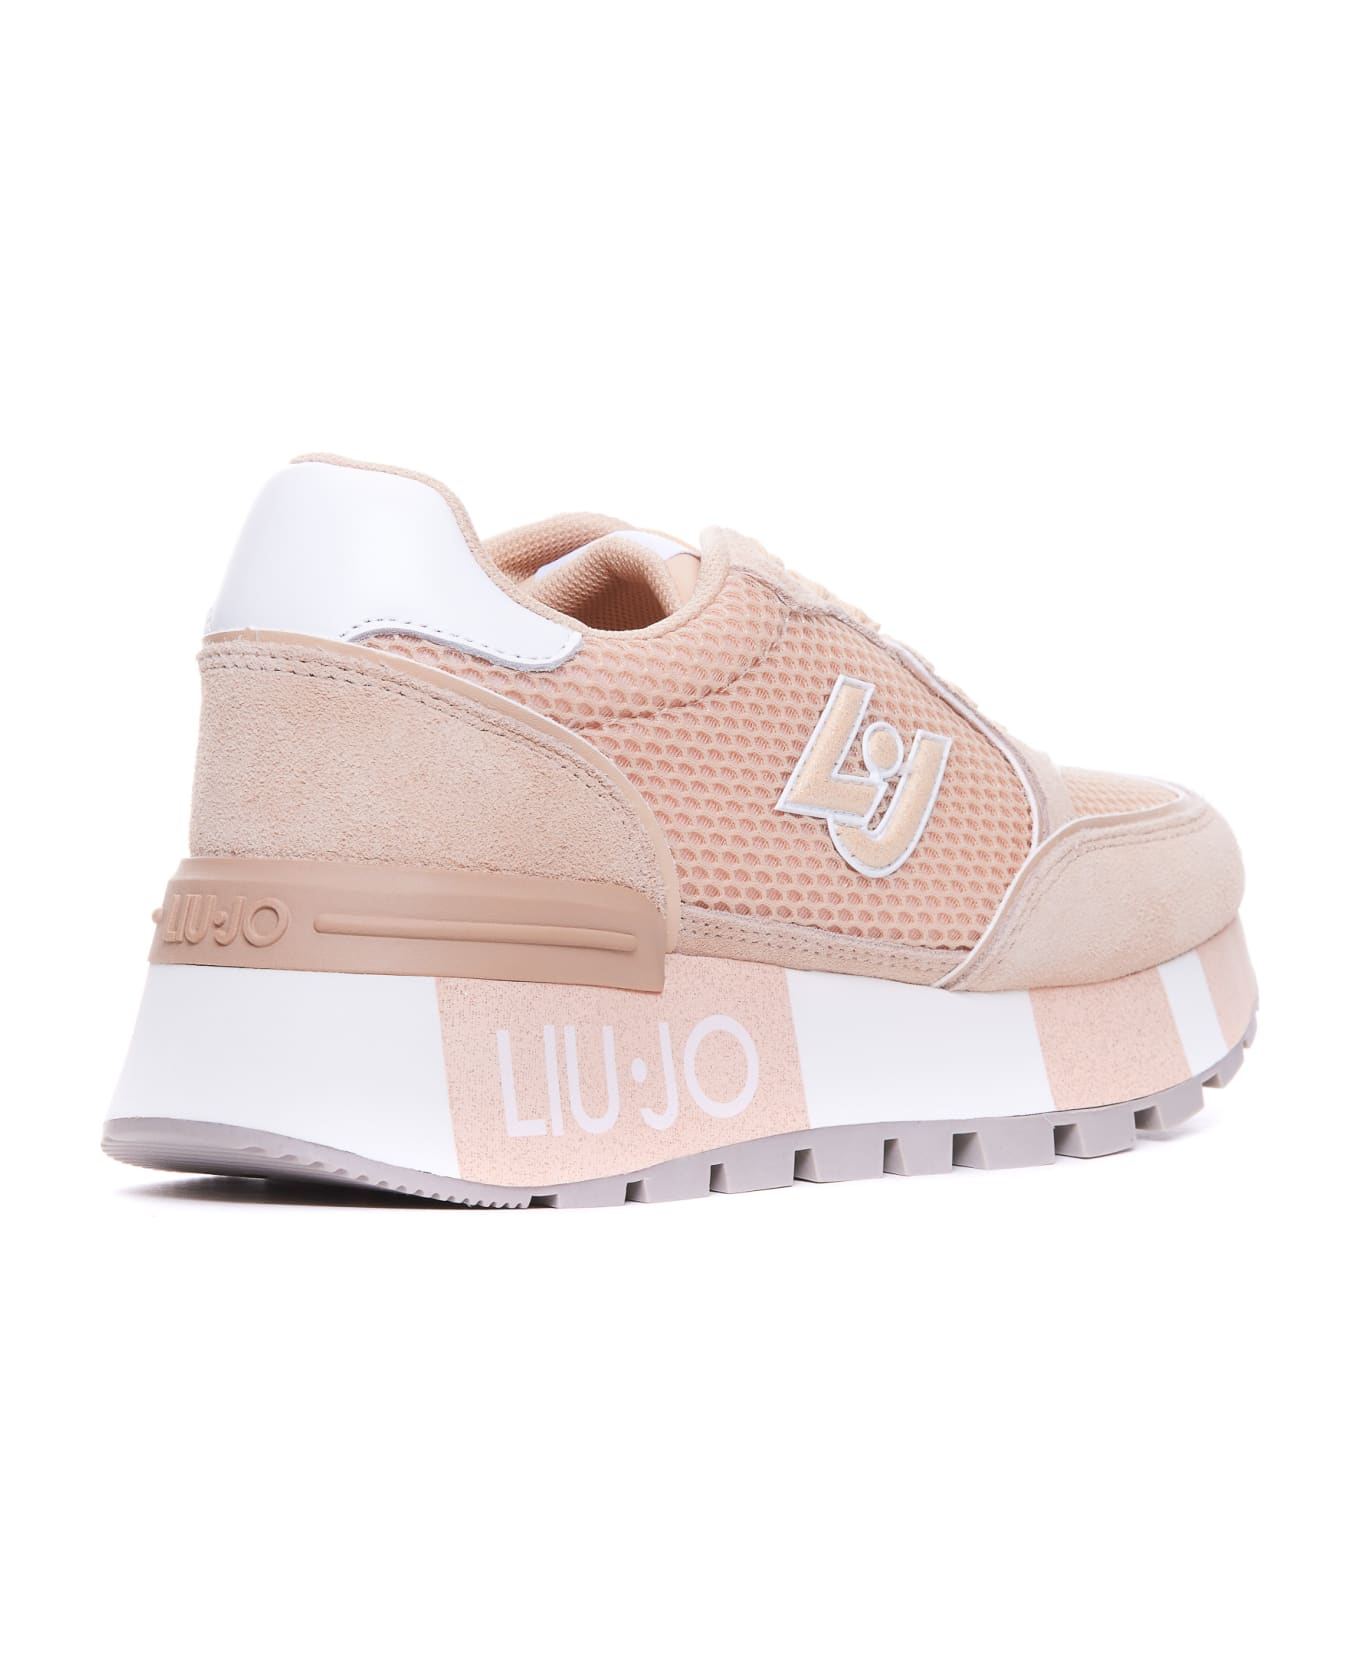 Liu-Jo Amazing Sneakers - Pink スニーカー